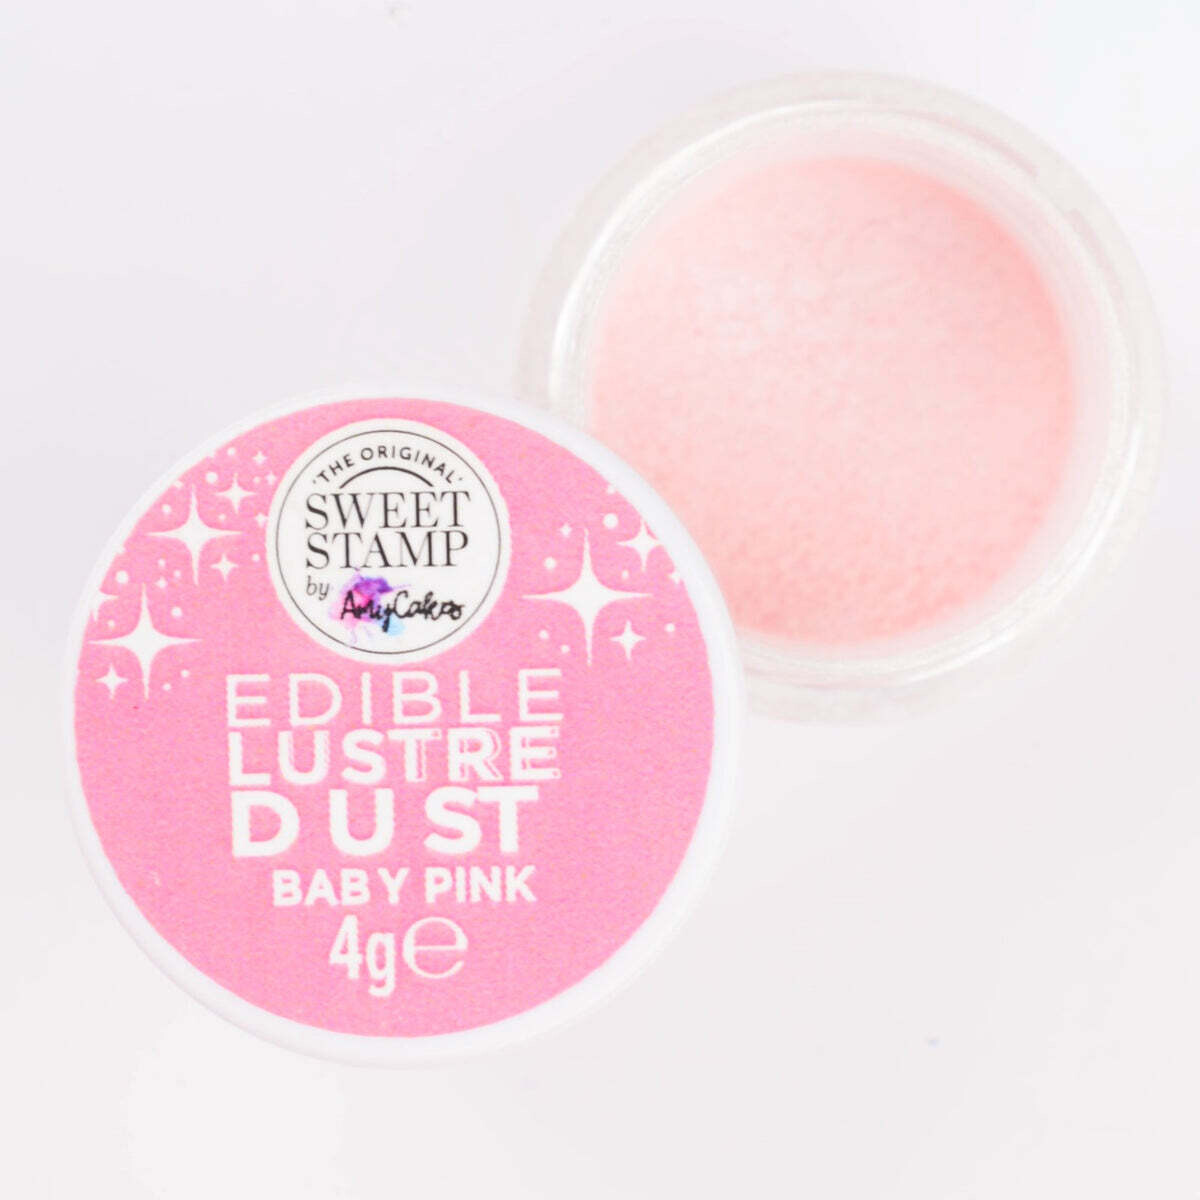 Sweet Stamp Edible Lustre Dust -BABY PINK - Βρώσιμη σκόνη Γυαλιστερή Απαλό Ροζ 4g